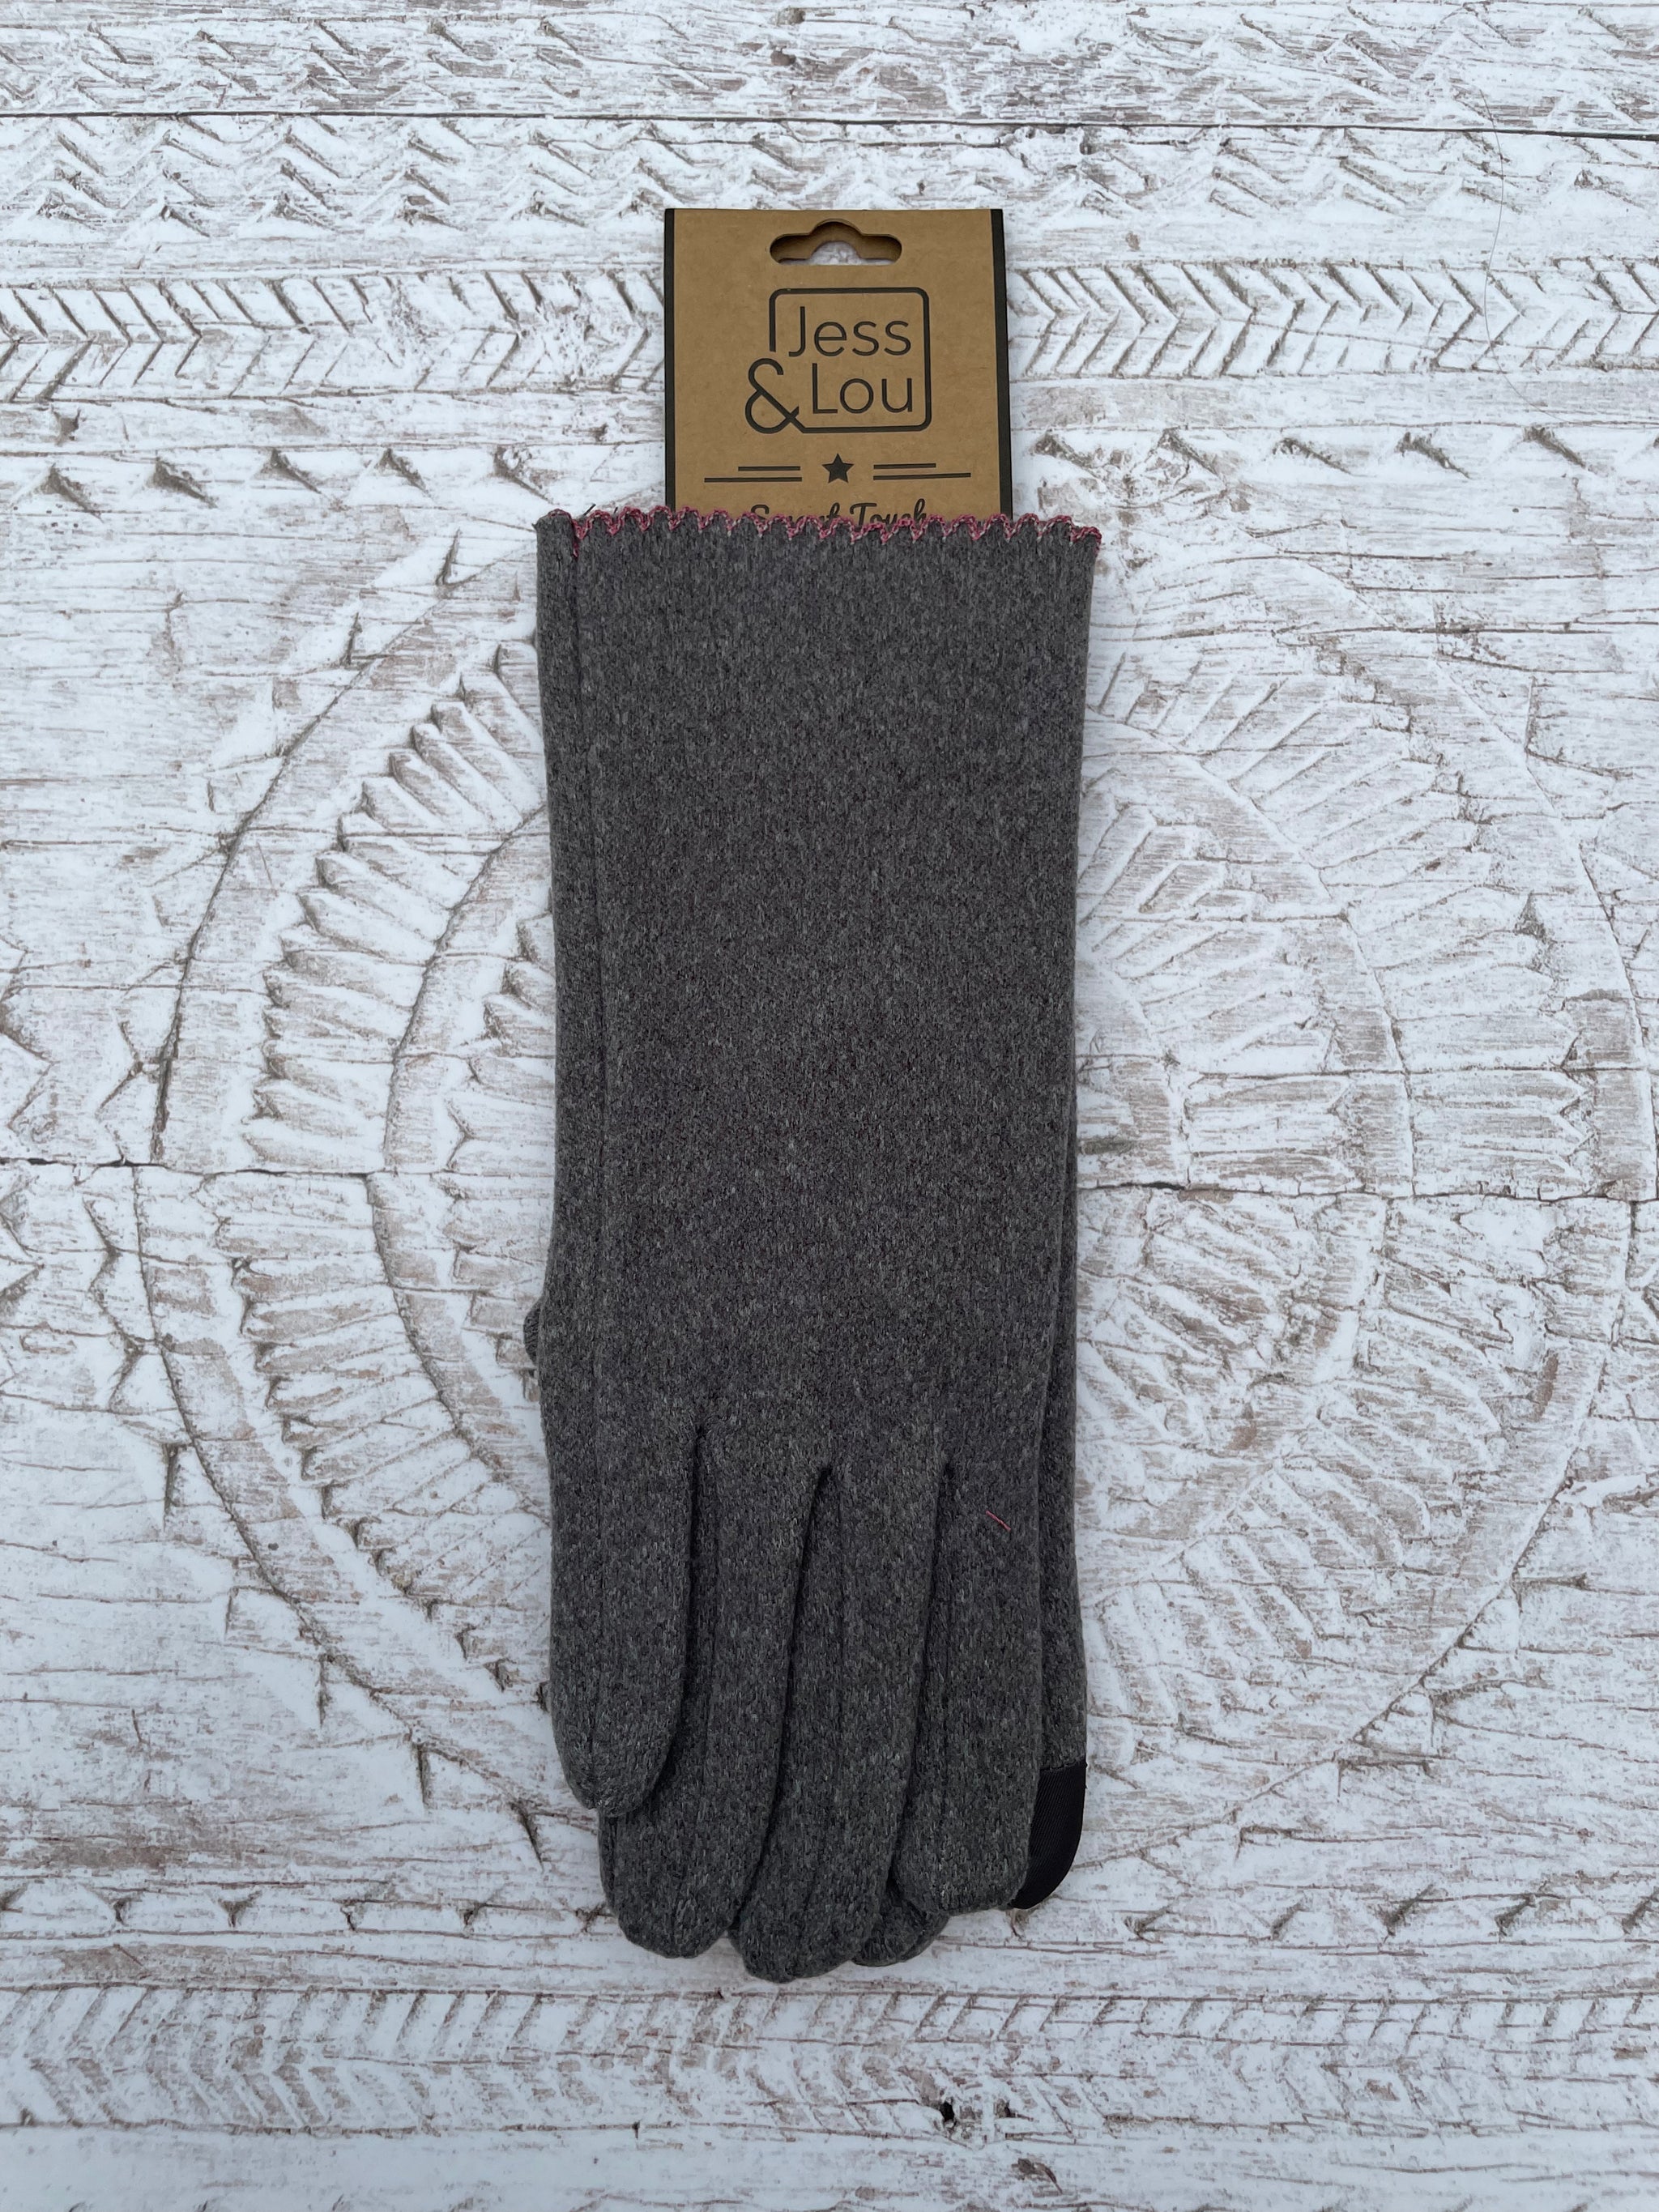 Pink Trim Gloves - Grey, Black  or Brown